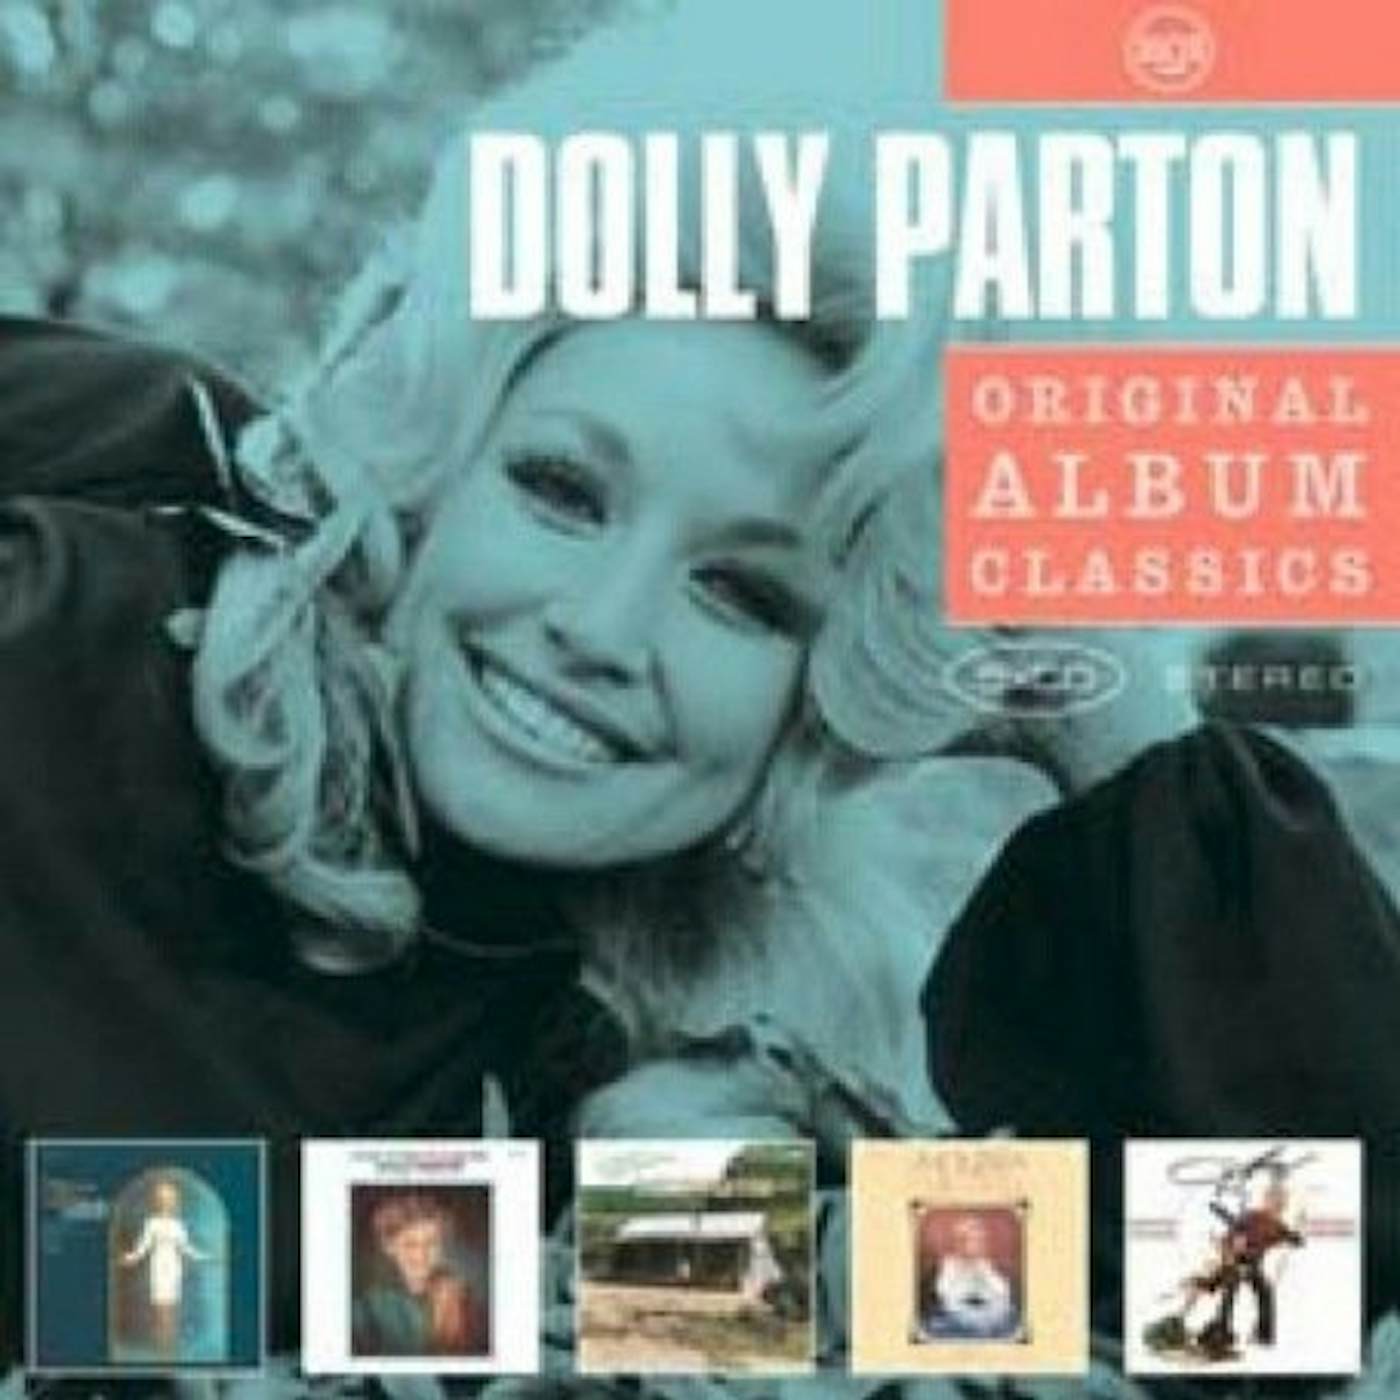 DOLLY PARTON SLIPCASE CD